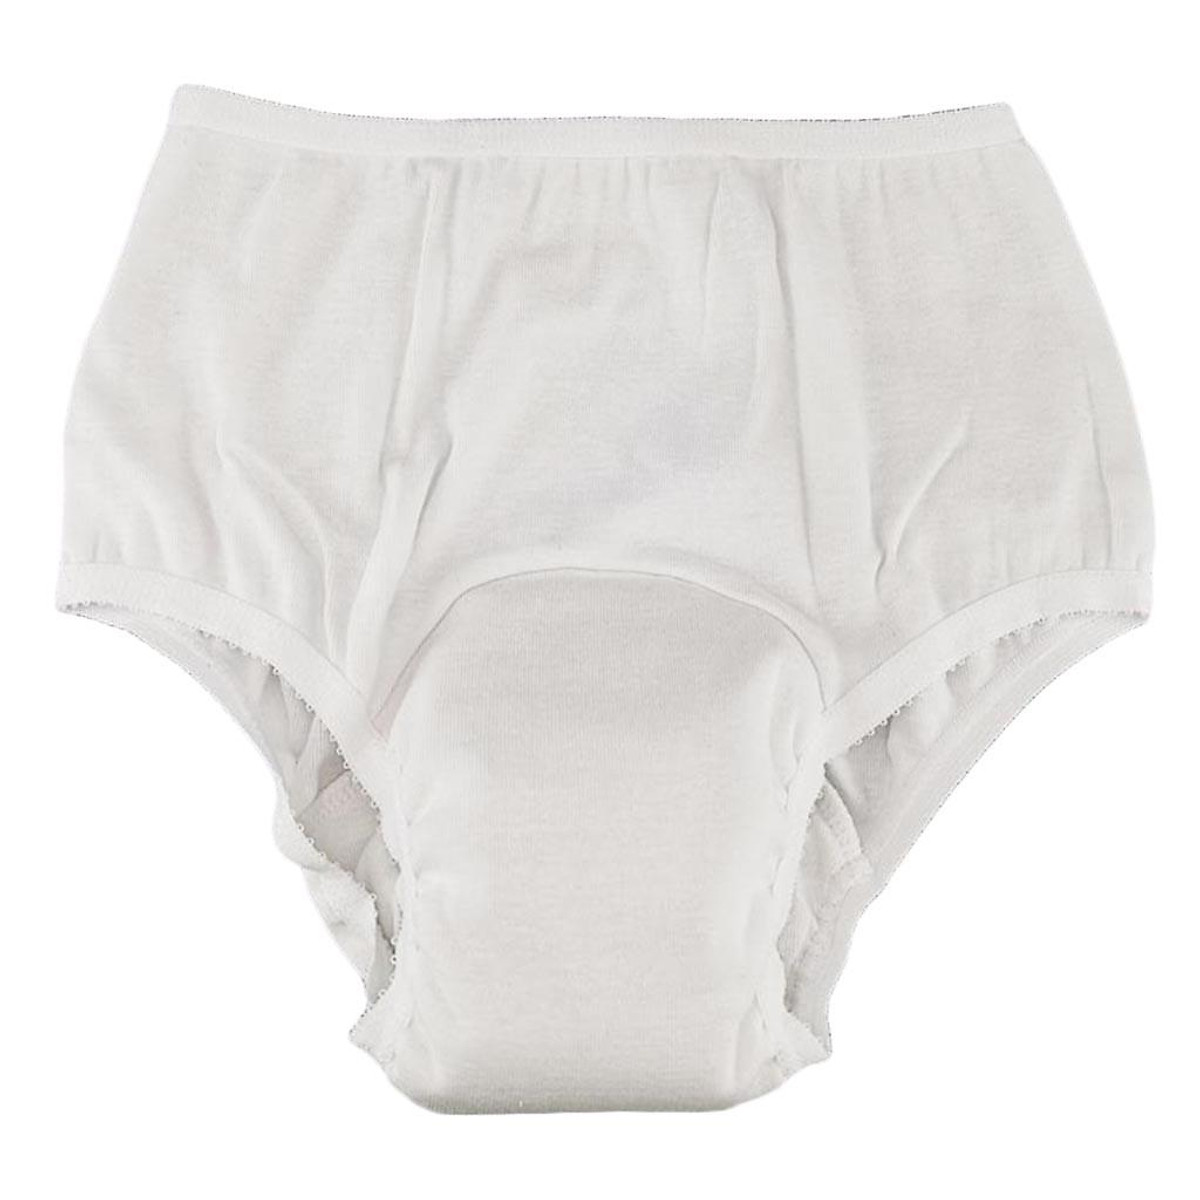 Aggregate more than 73 tena lady pants discreet super hot - in.eteachers